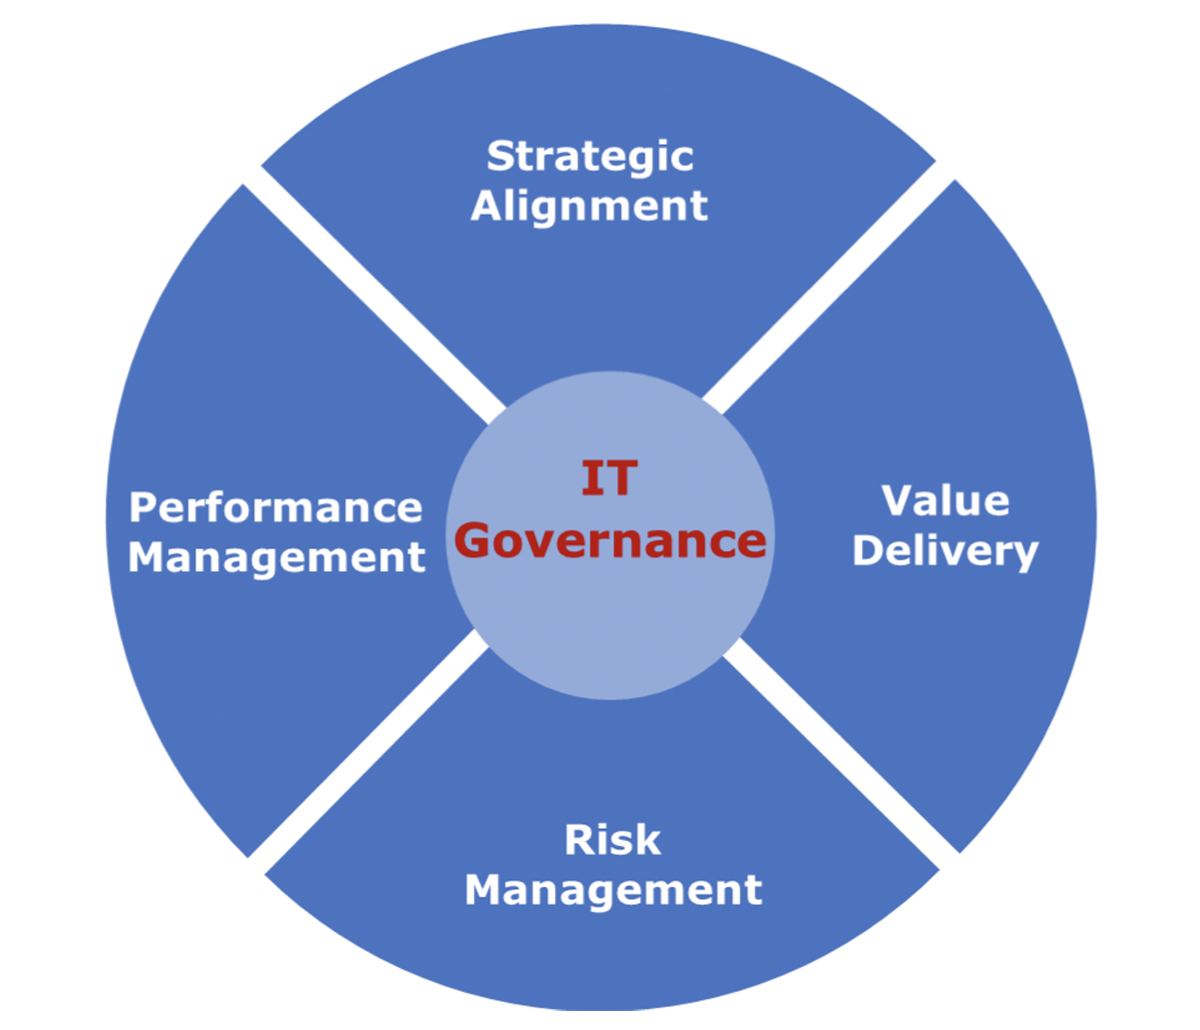 Training IT Governance